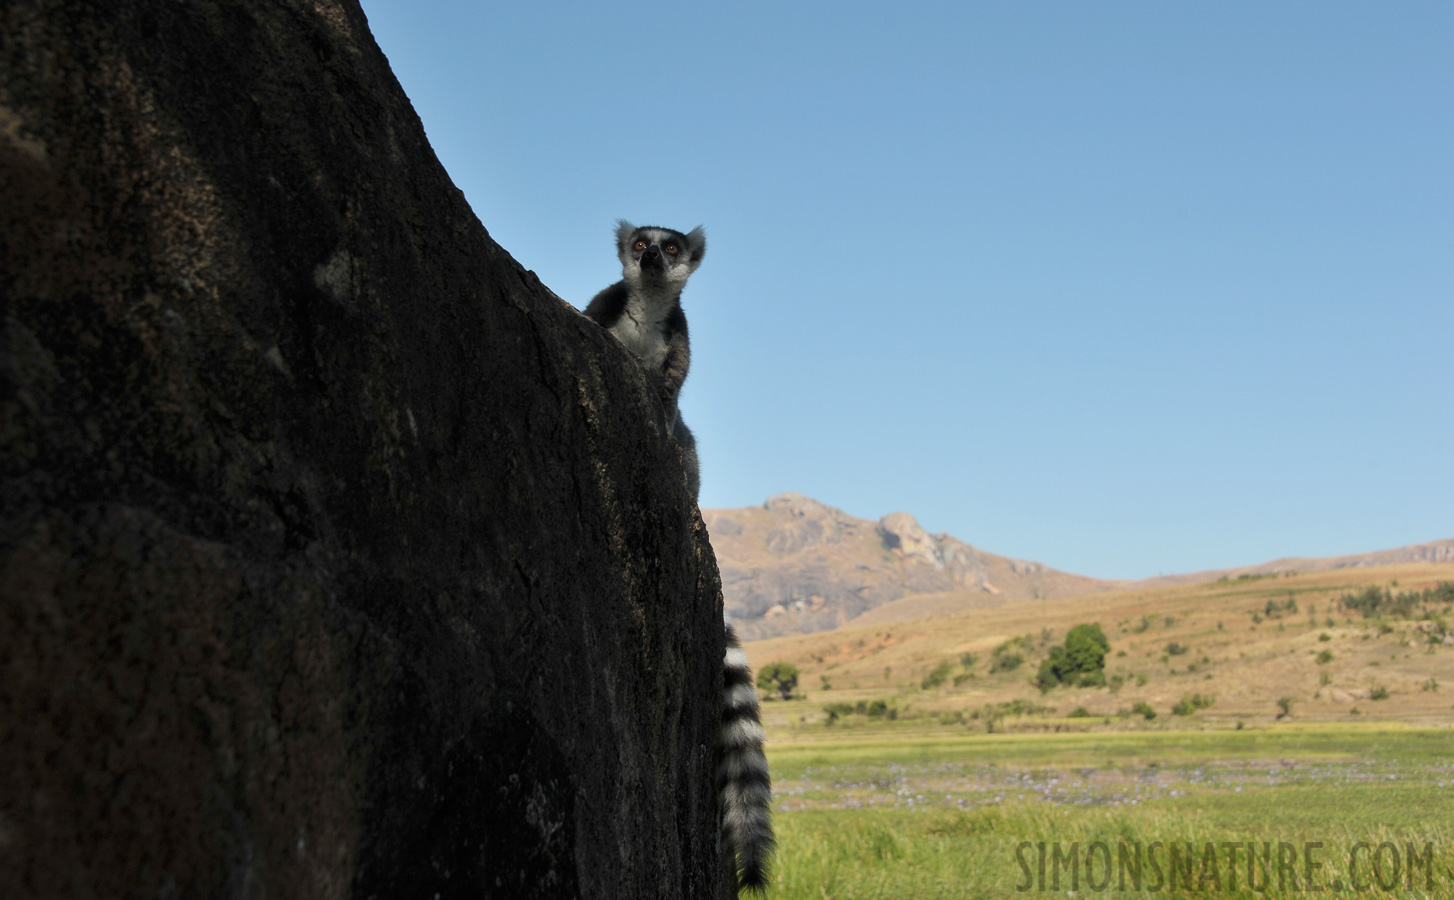 Lemur catta [55 mm, 1/1000 sec at f / 8.0, ISO 400]